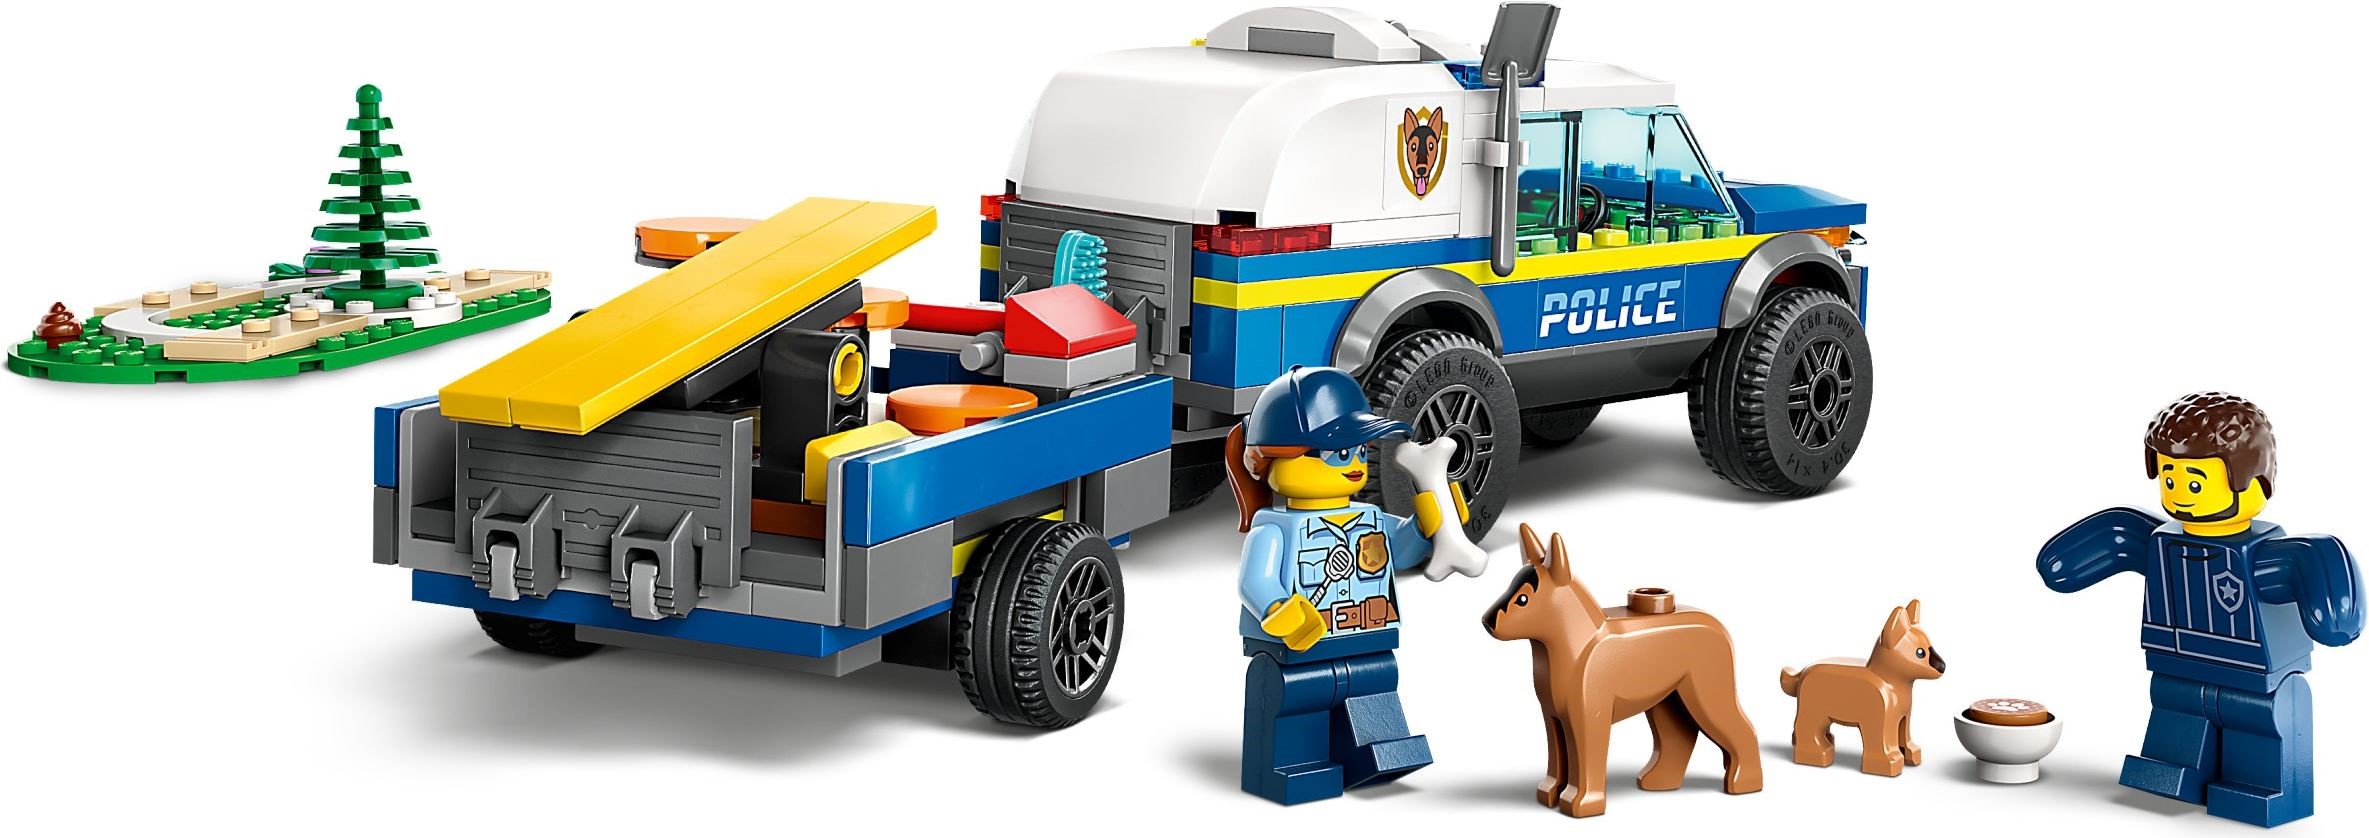 Mobile Police Dog Training 60369, City